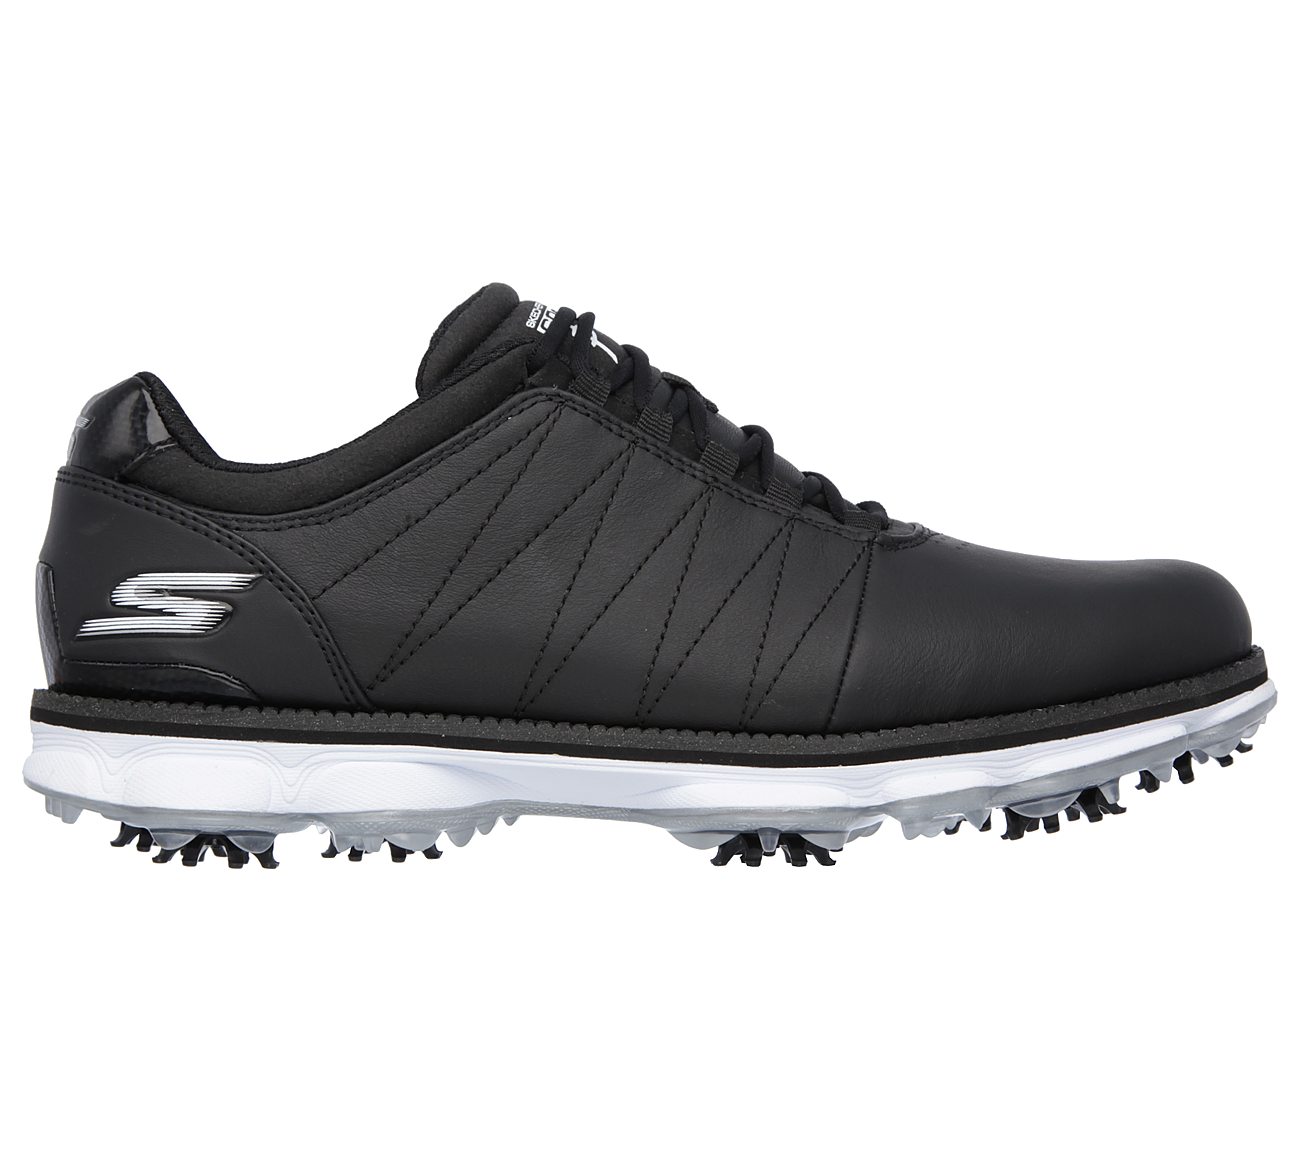 skechers waterproof golf shoes